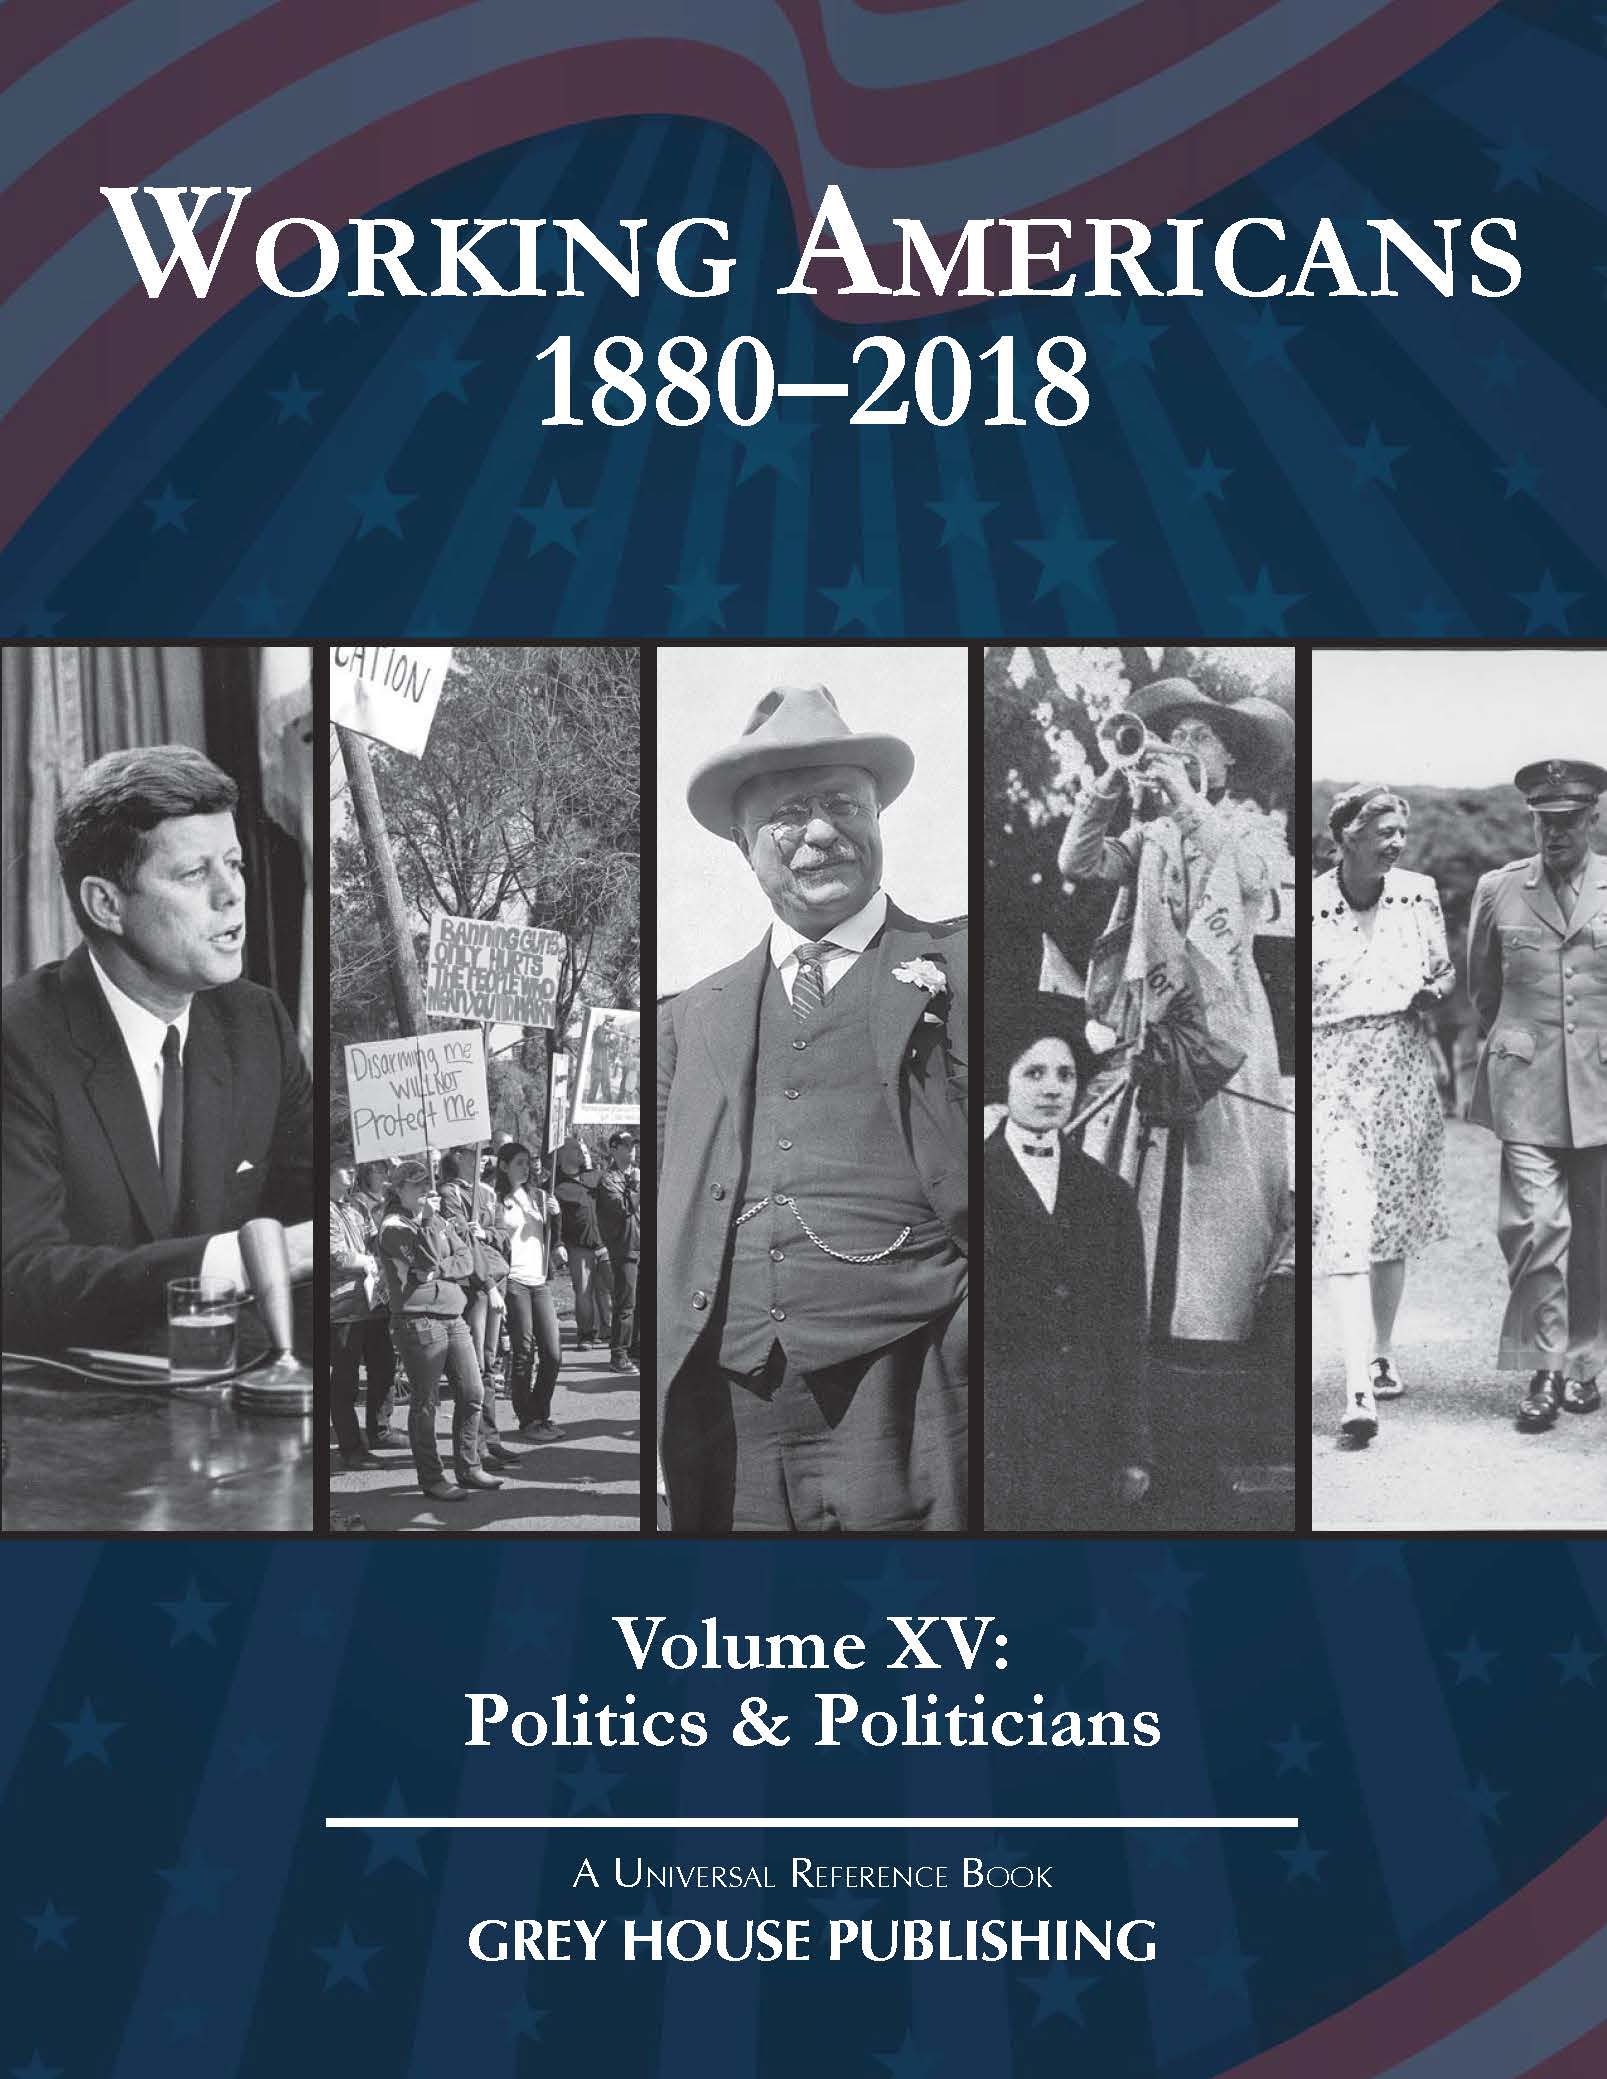 Working Americans 1880-2018 Volume XV: Politics & Politicians